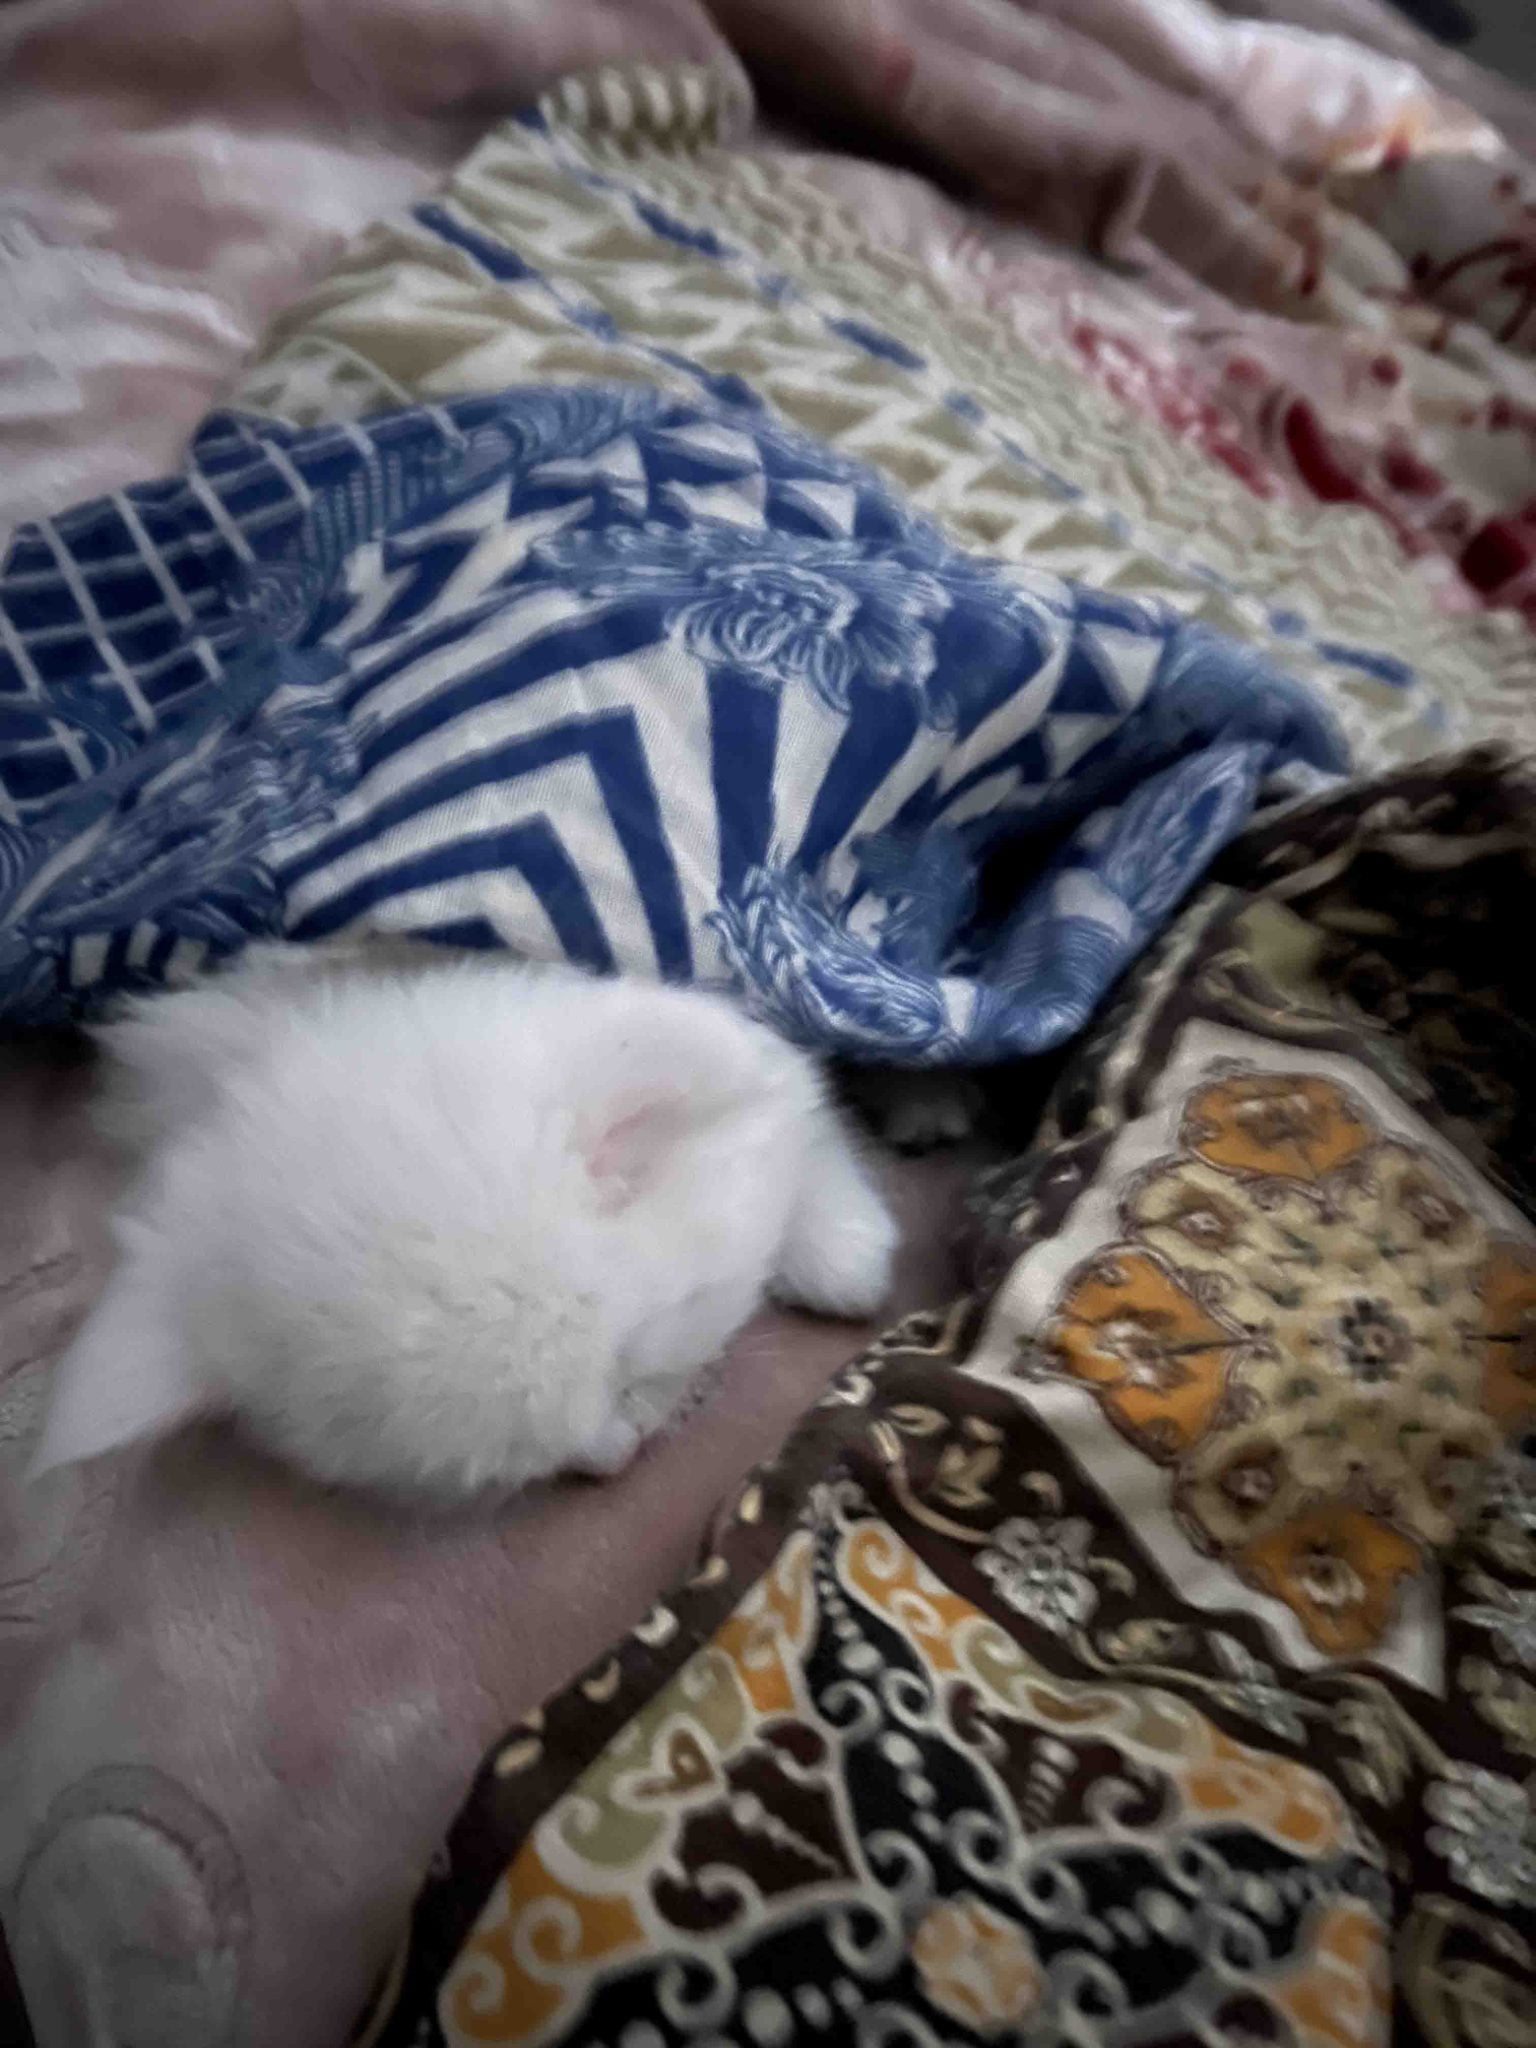 Mewtwo sleeping